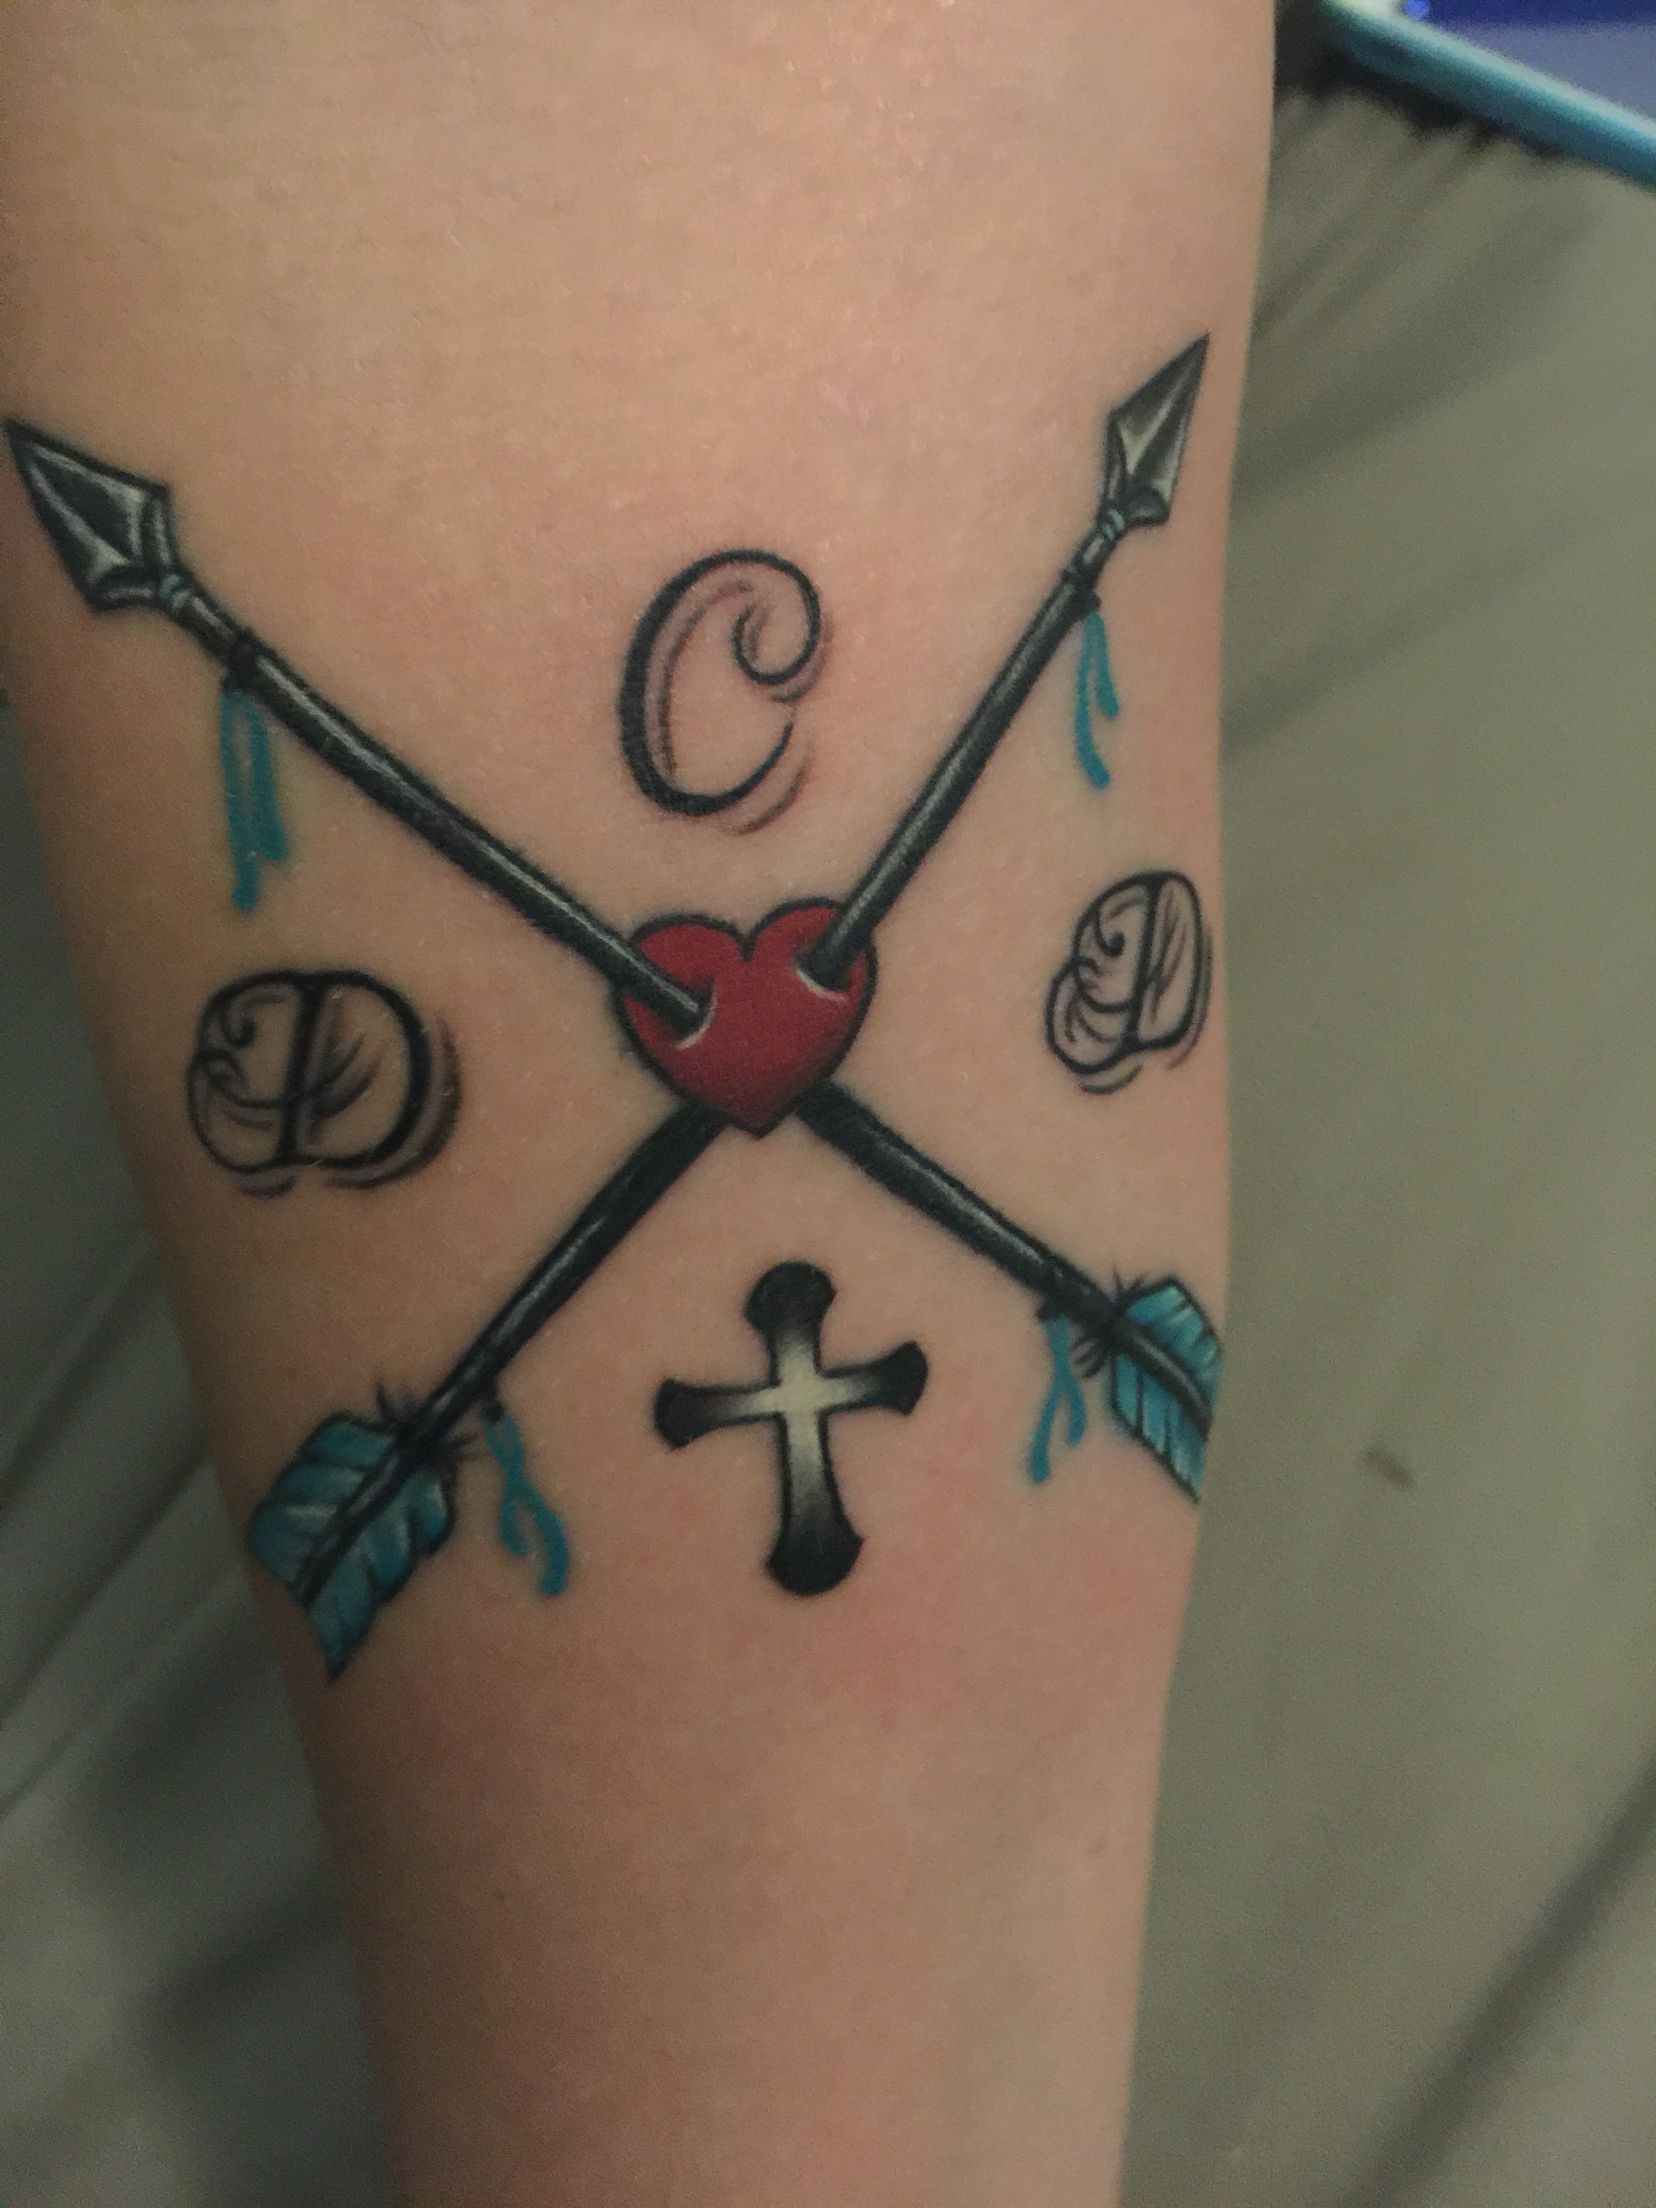 Arrows Initials Cross Heart Tattoo Tattoos Tattoos Deathly with regard to dimensions 1656 X 2208